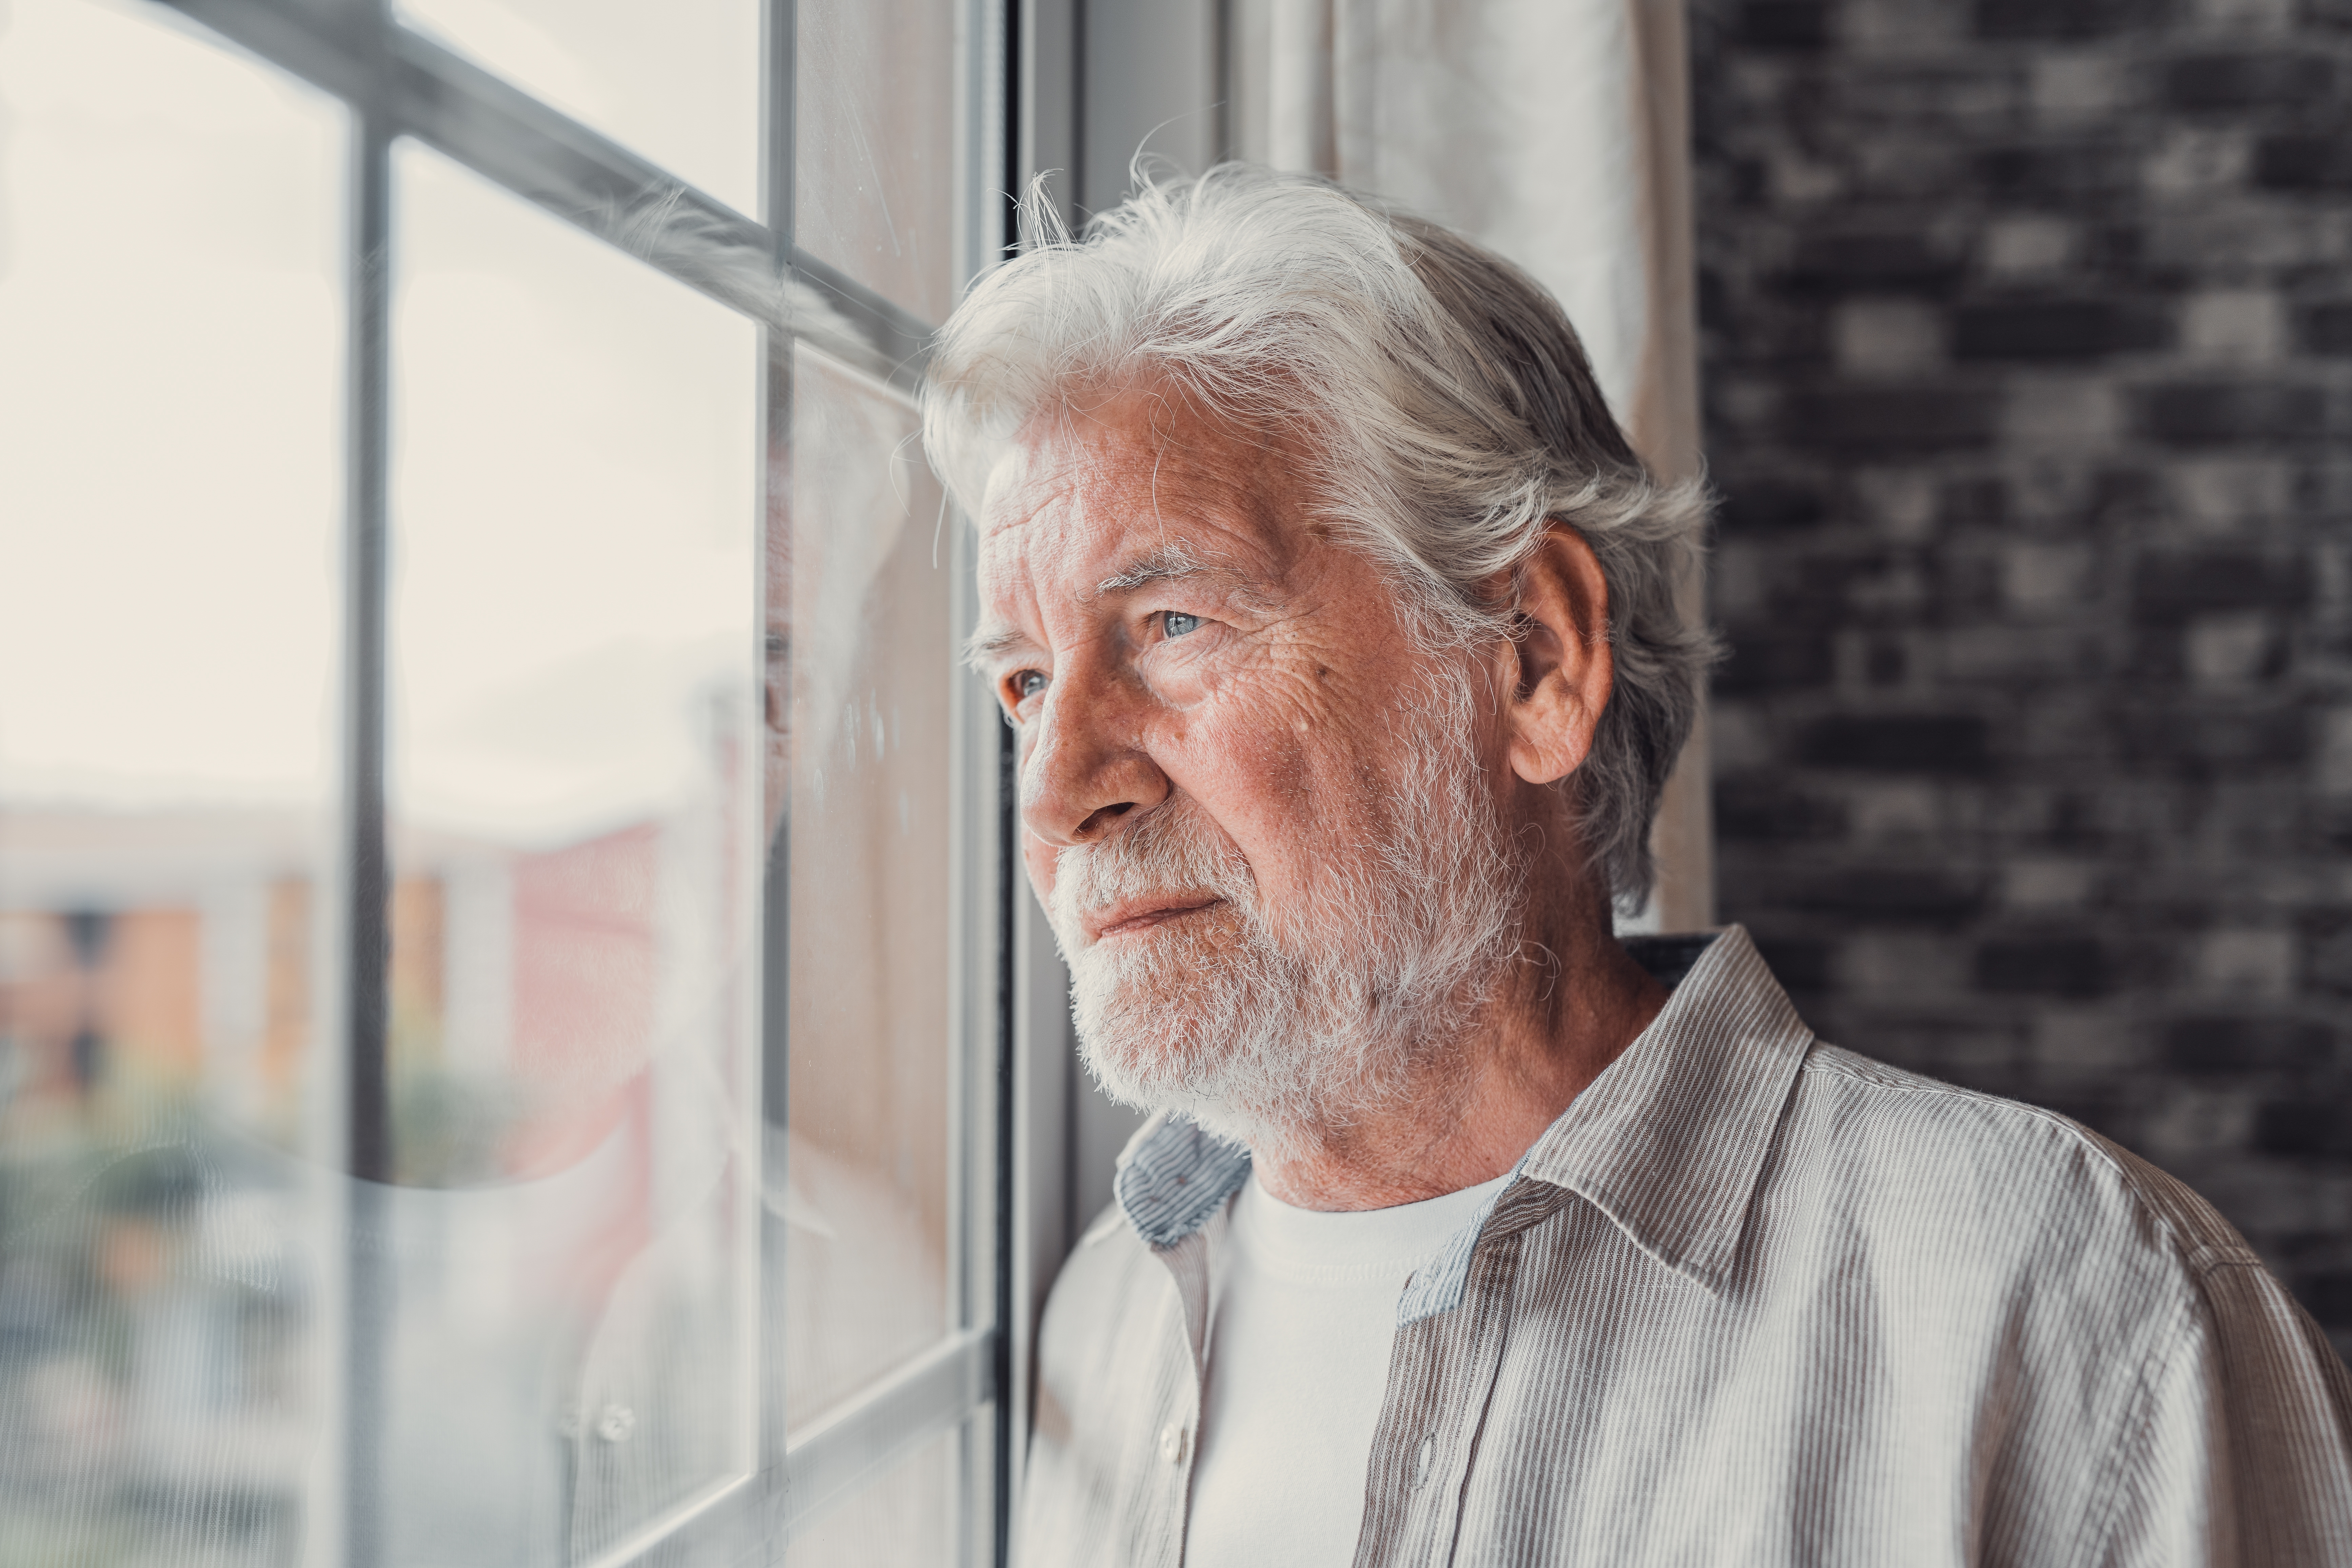 Pensive senior man looking outside | Source: Shutterstock